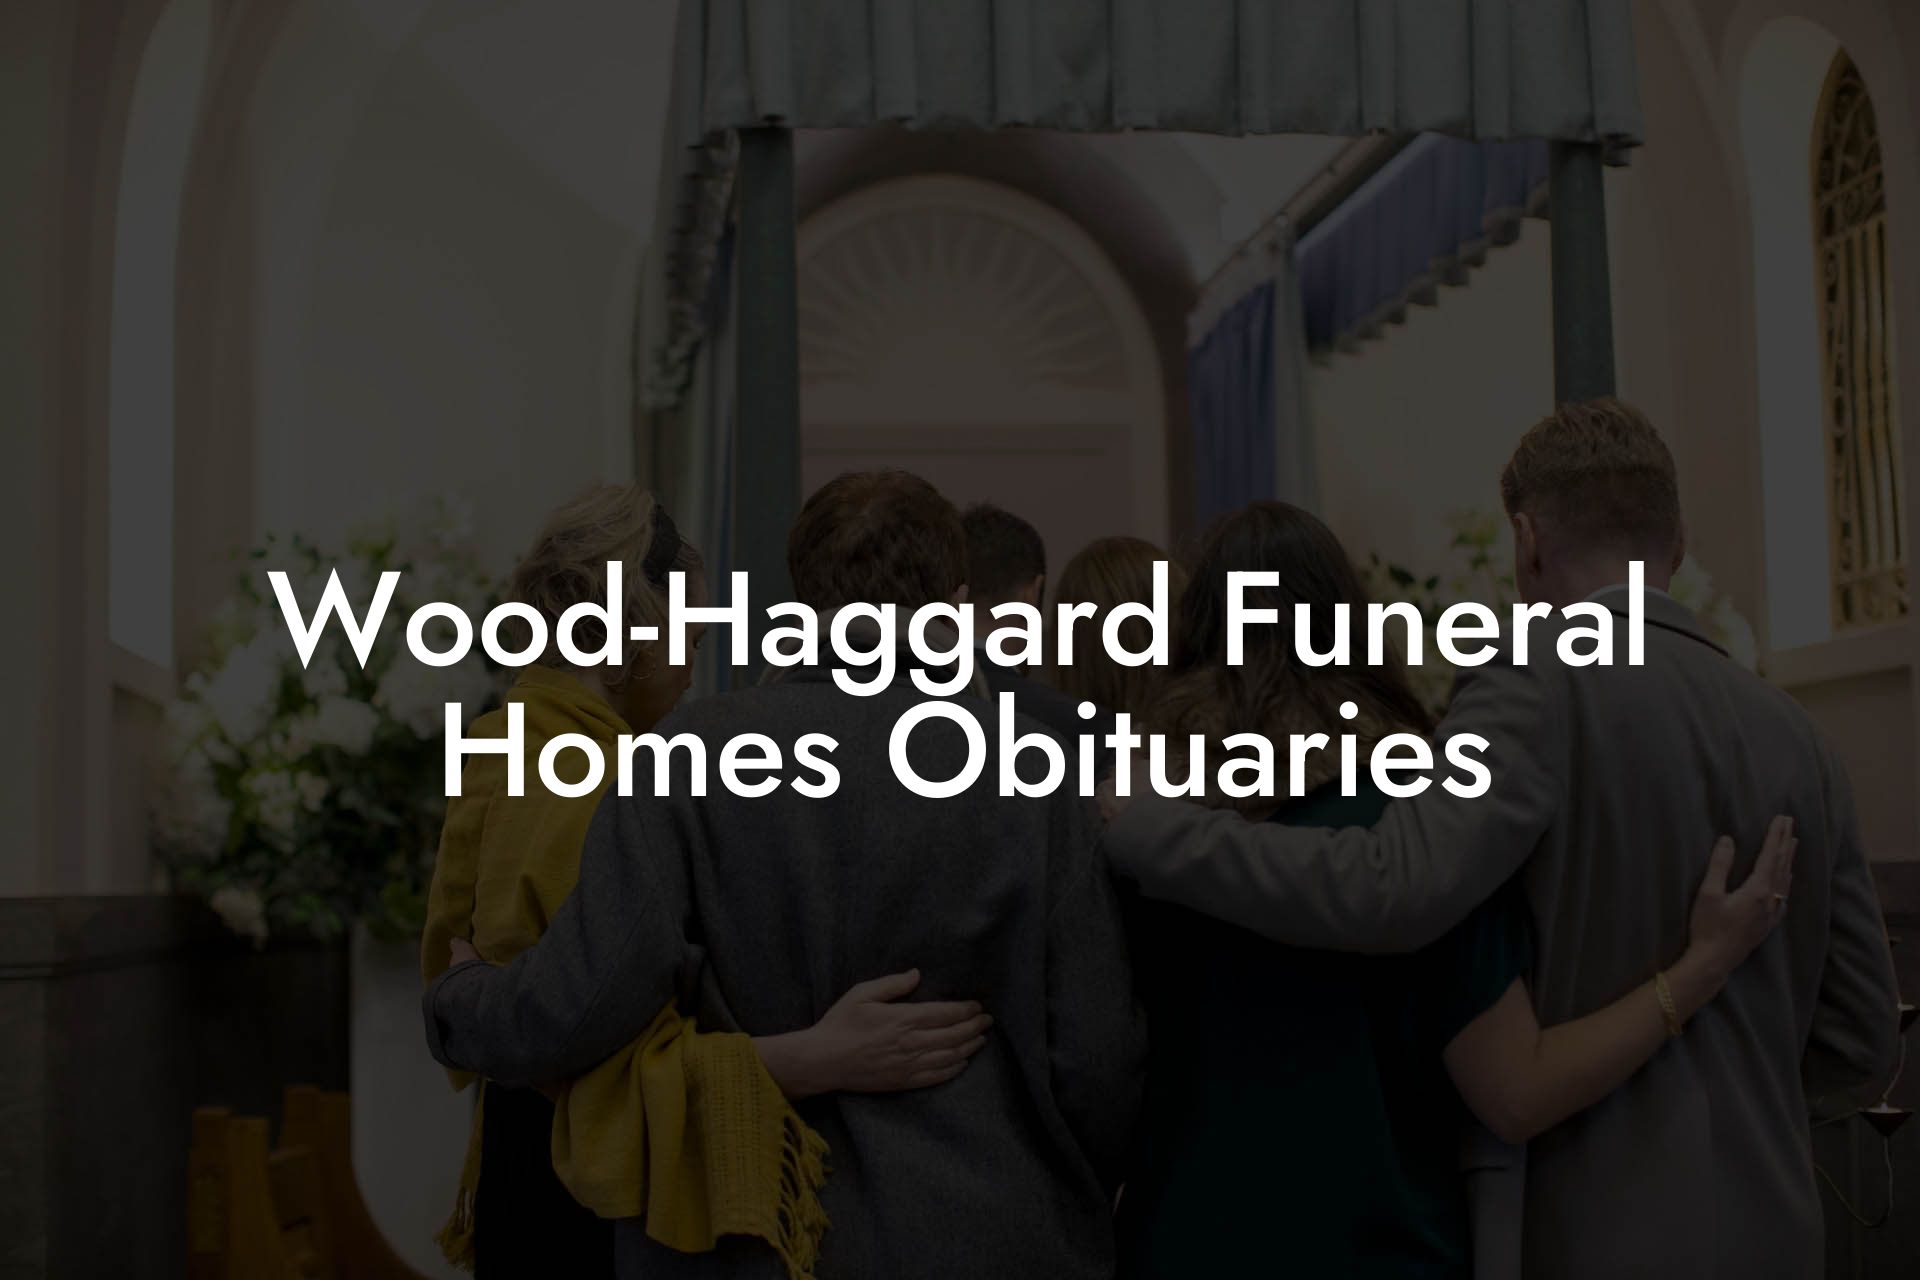 Wood-Haggard Funeral Homes Obituaries